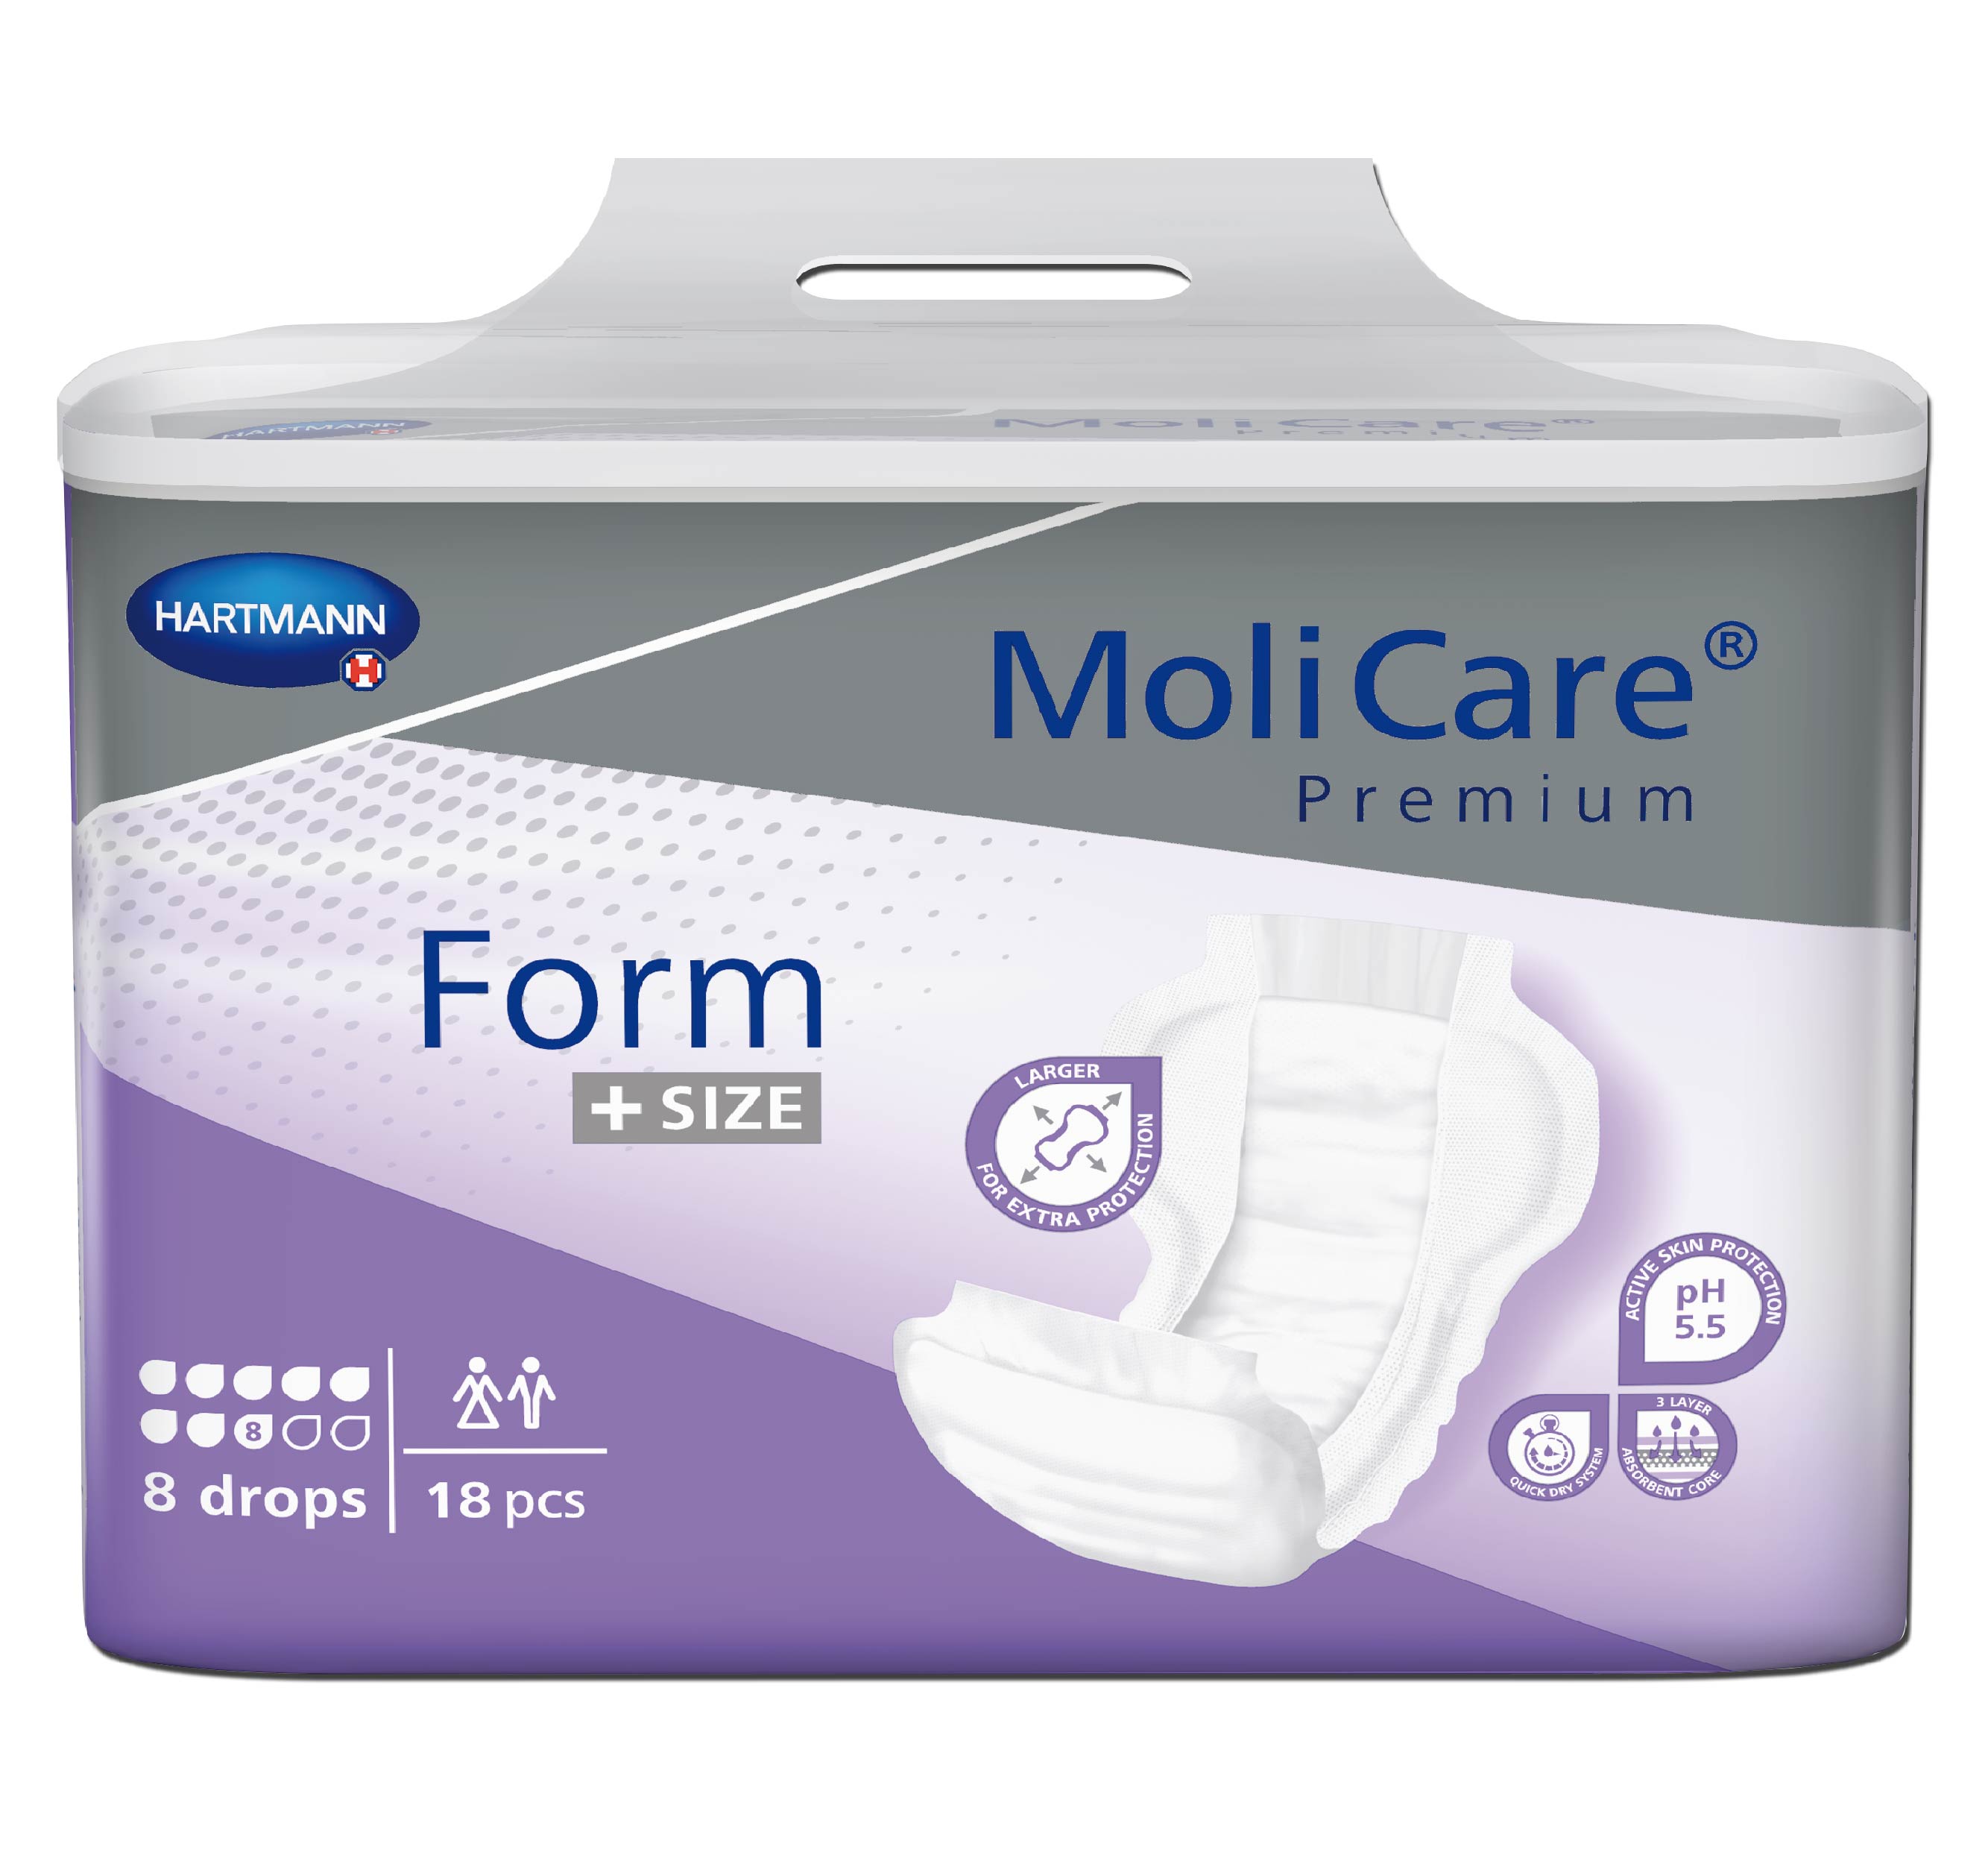 MoliCare Premium Form +Size 8 drops 54